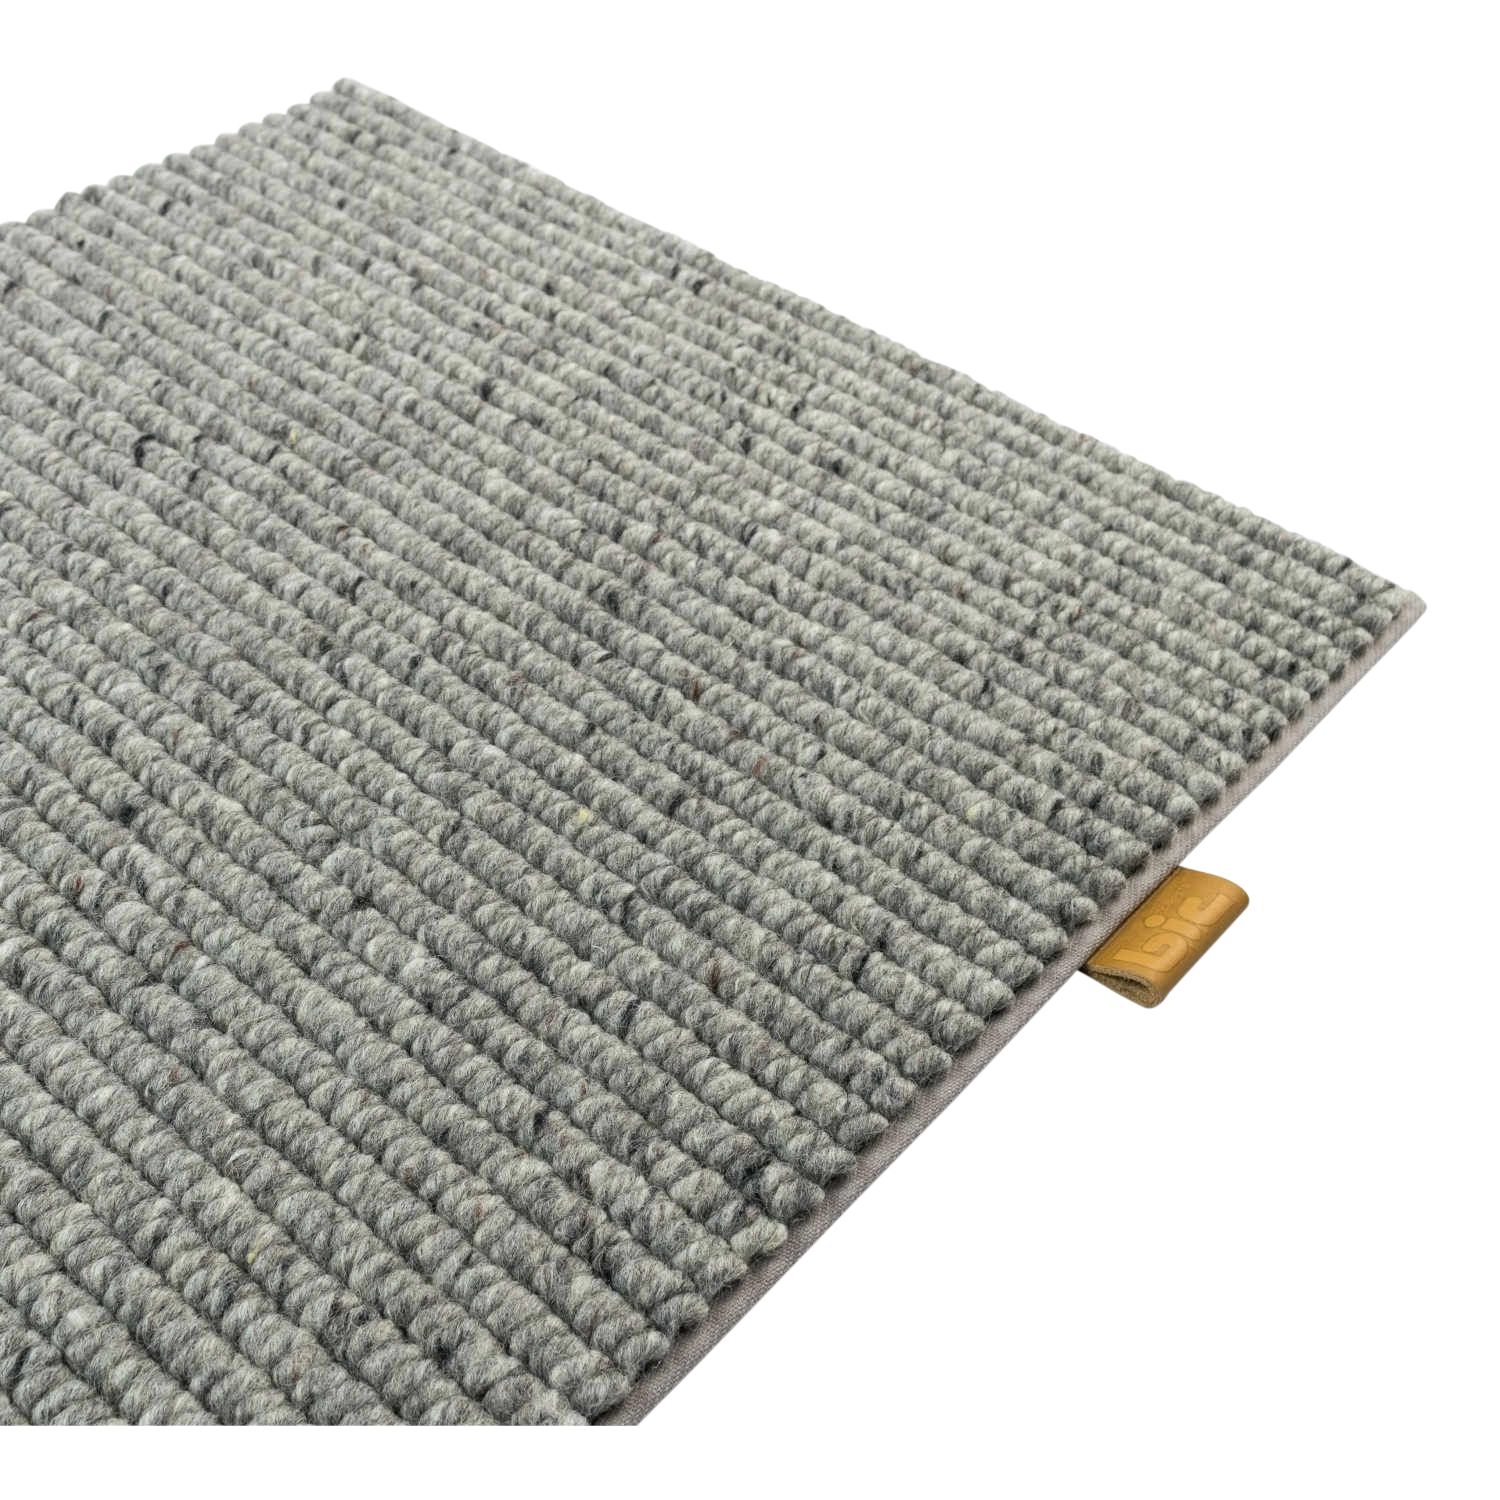 Luna Teppich, Farbe 1860 cold grey, Grösse 200 x 200cm von B.I.C Carpets